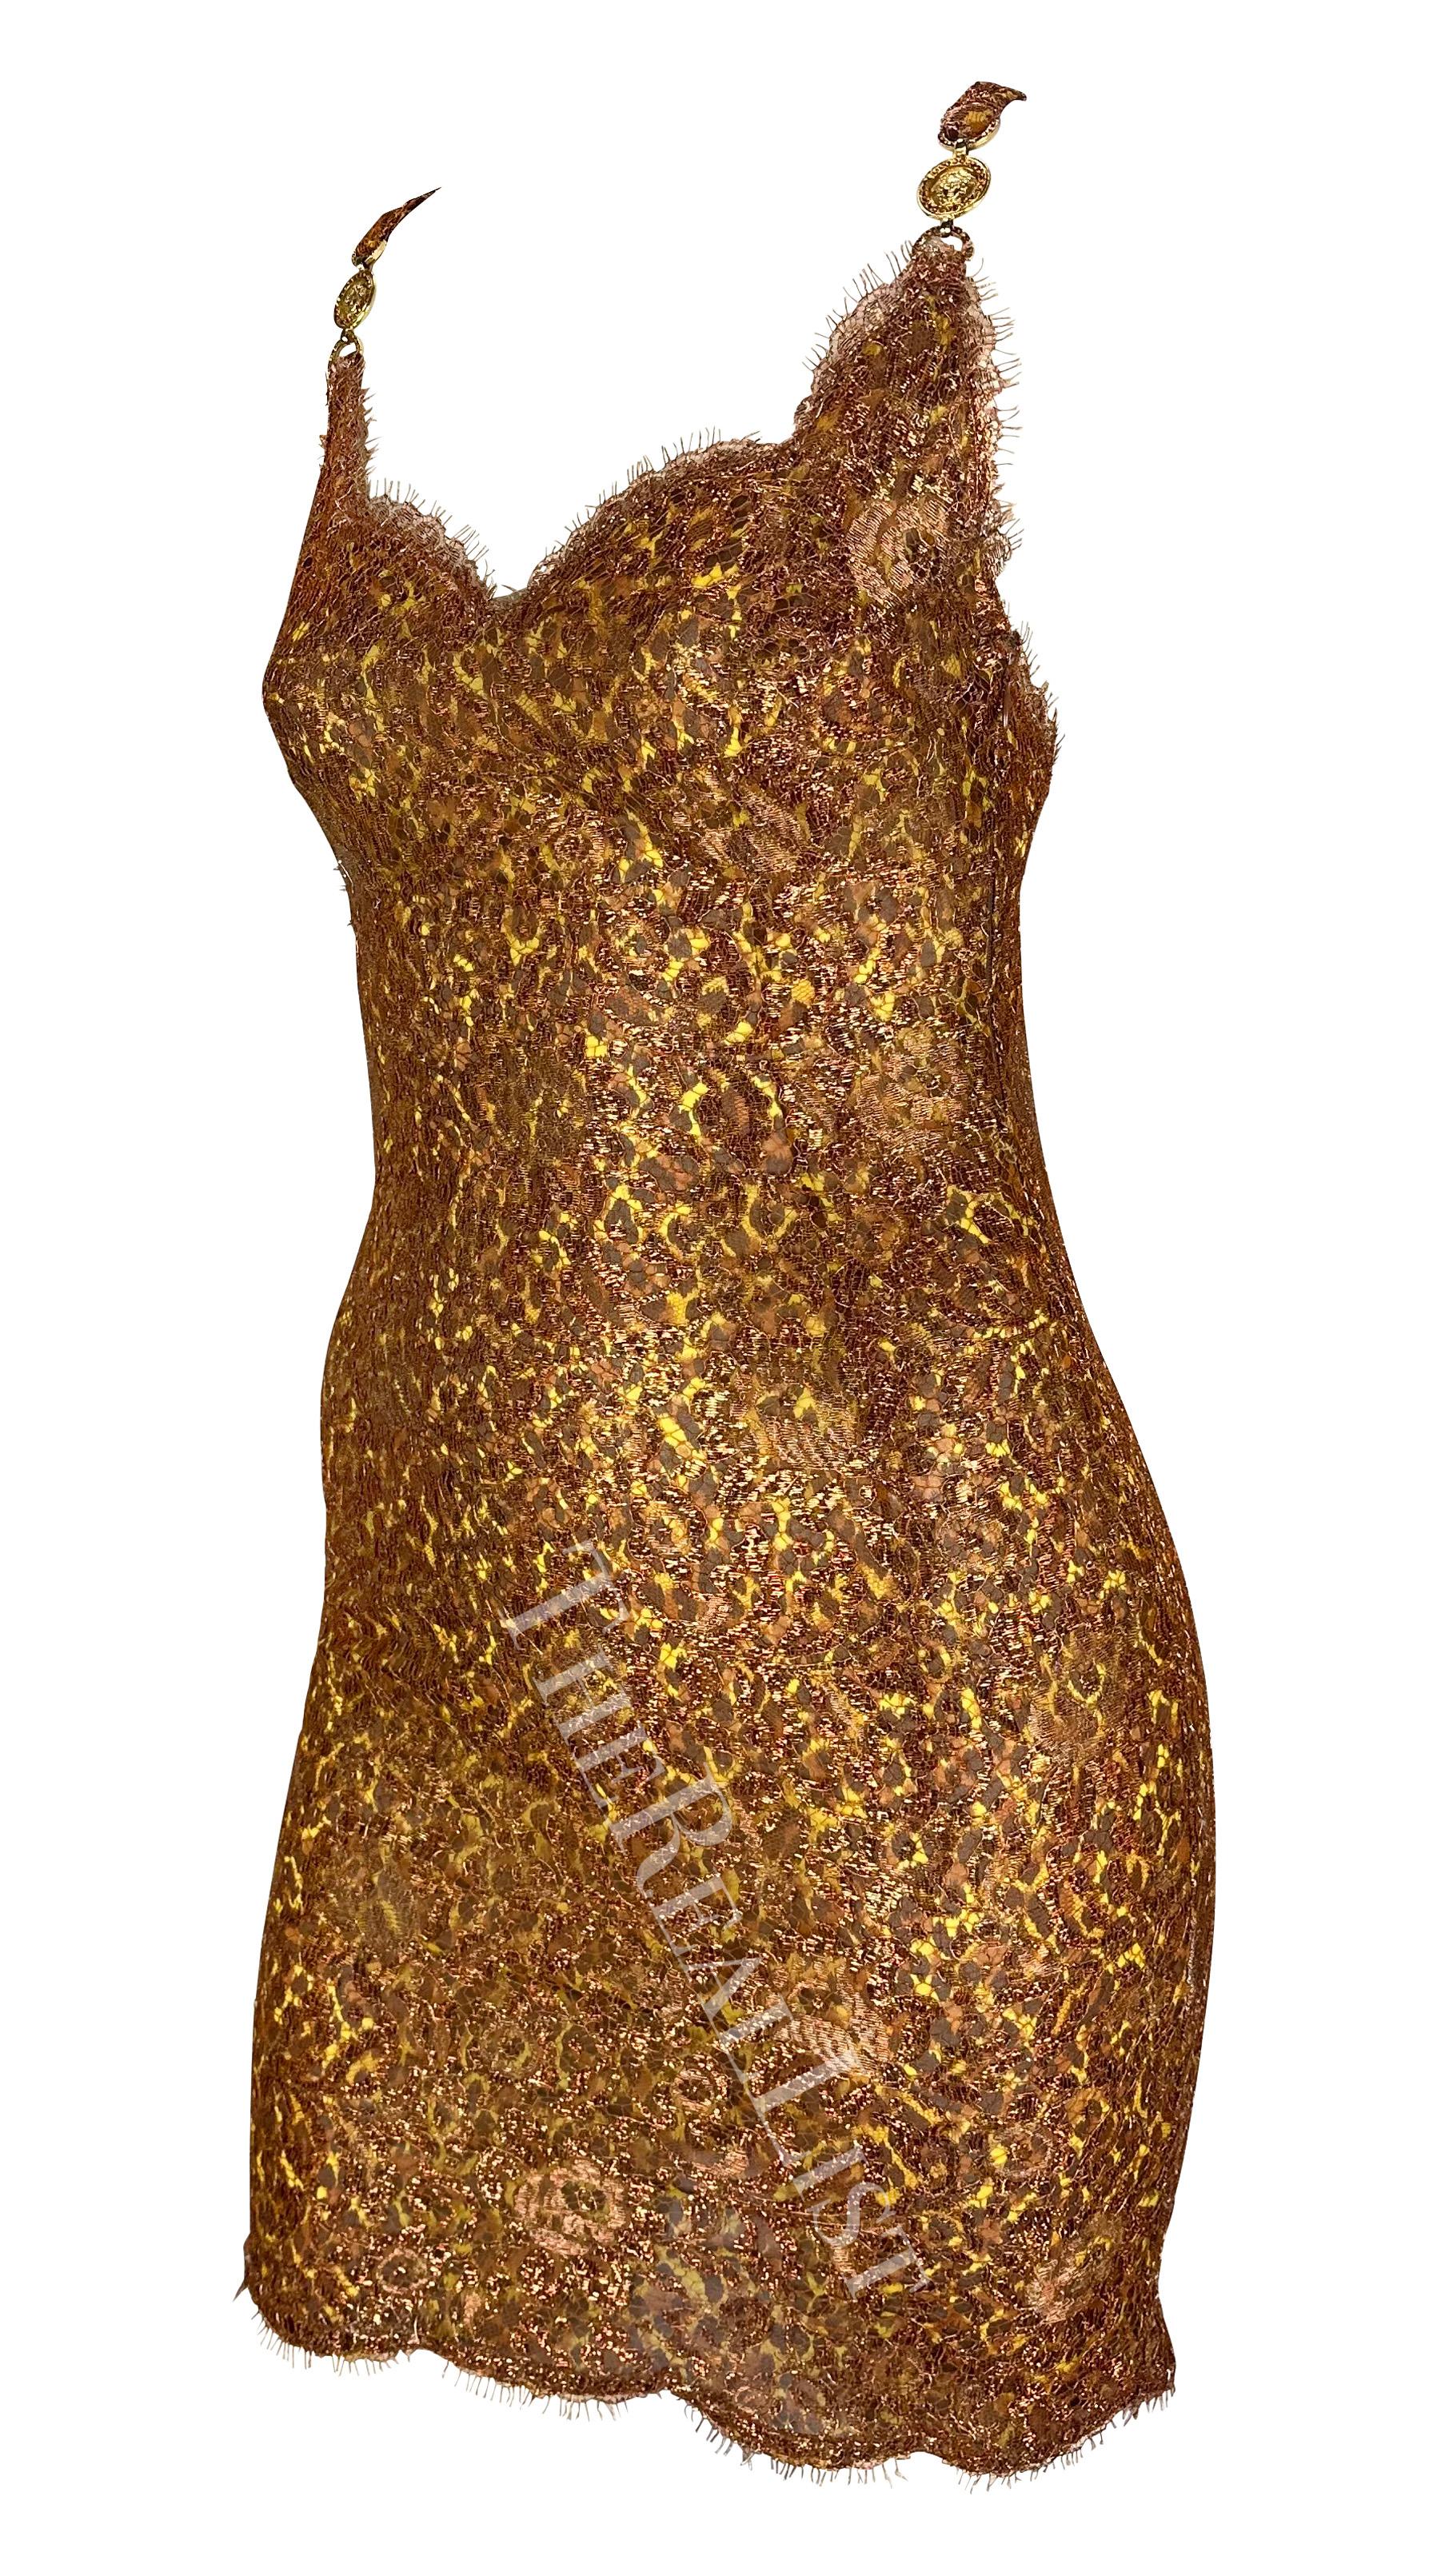 S/S 1996 Atelier Versace Haute Couture Copper Lace Cheetah Rhinestone Mini Dress For Sale 10